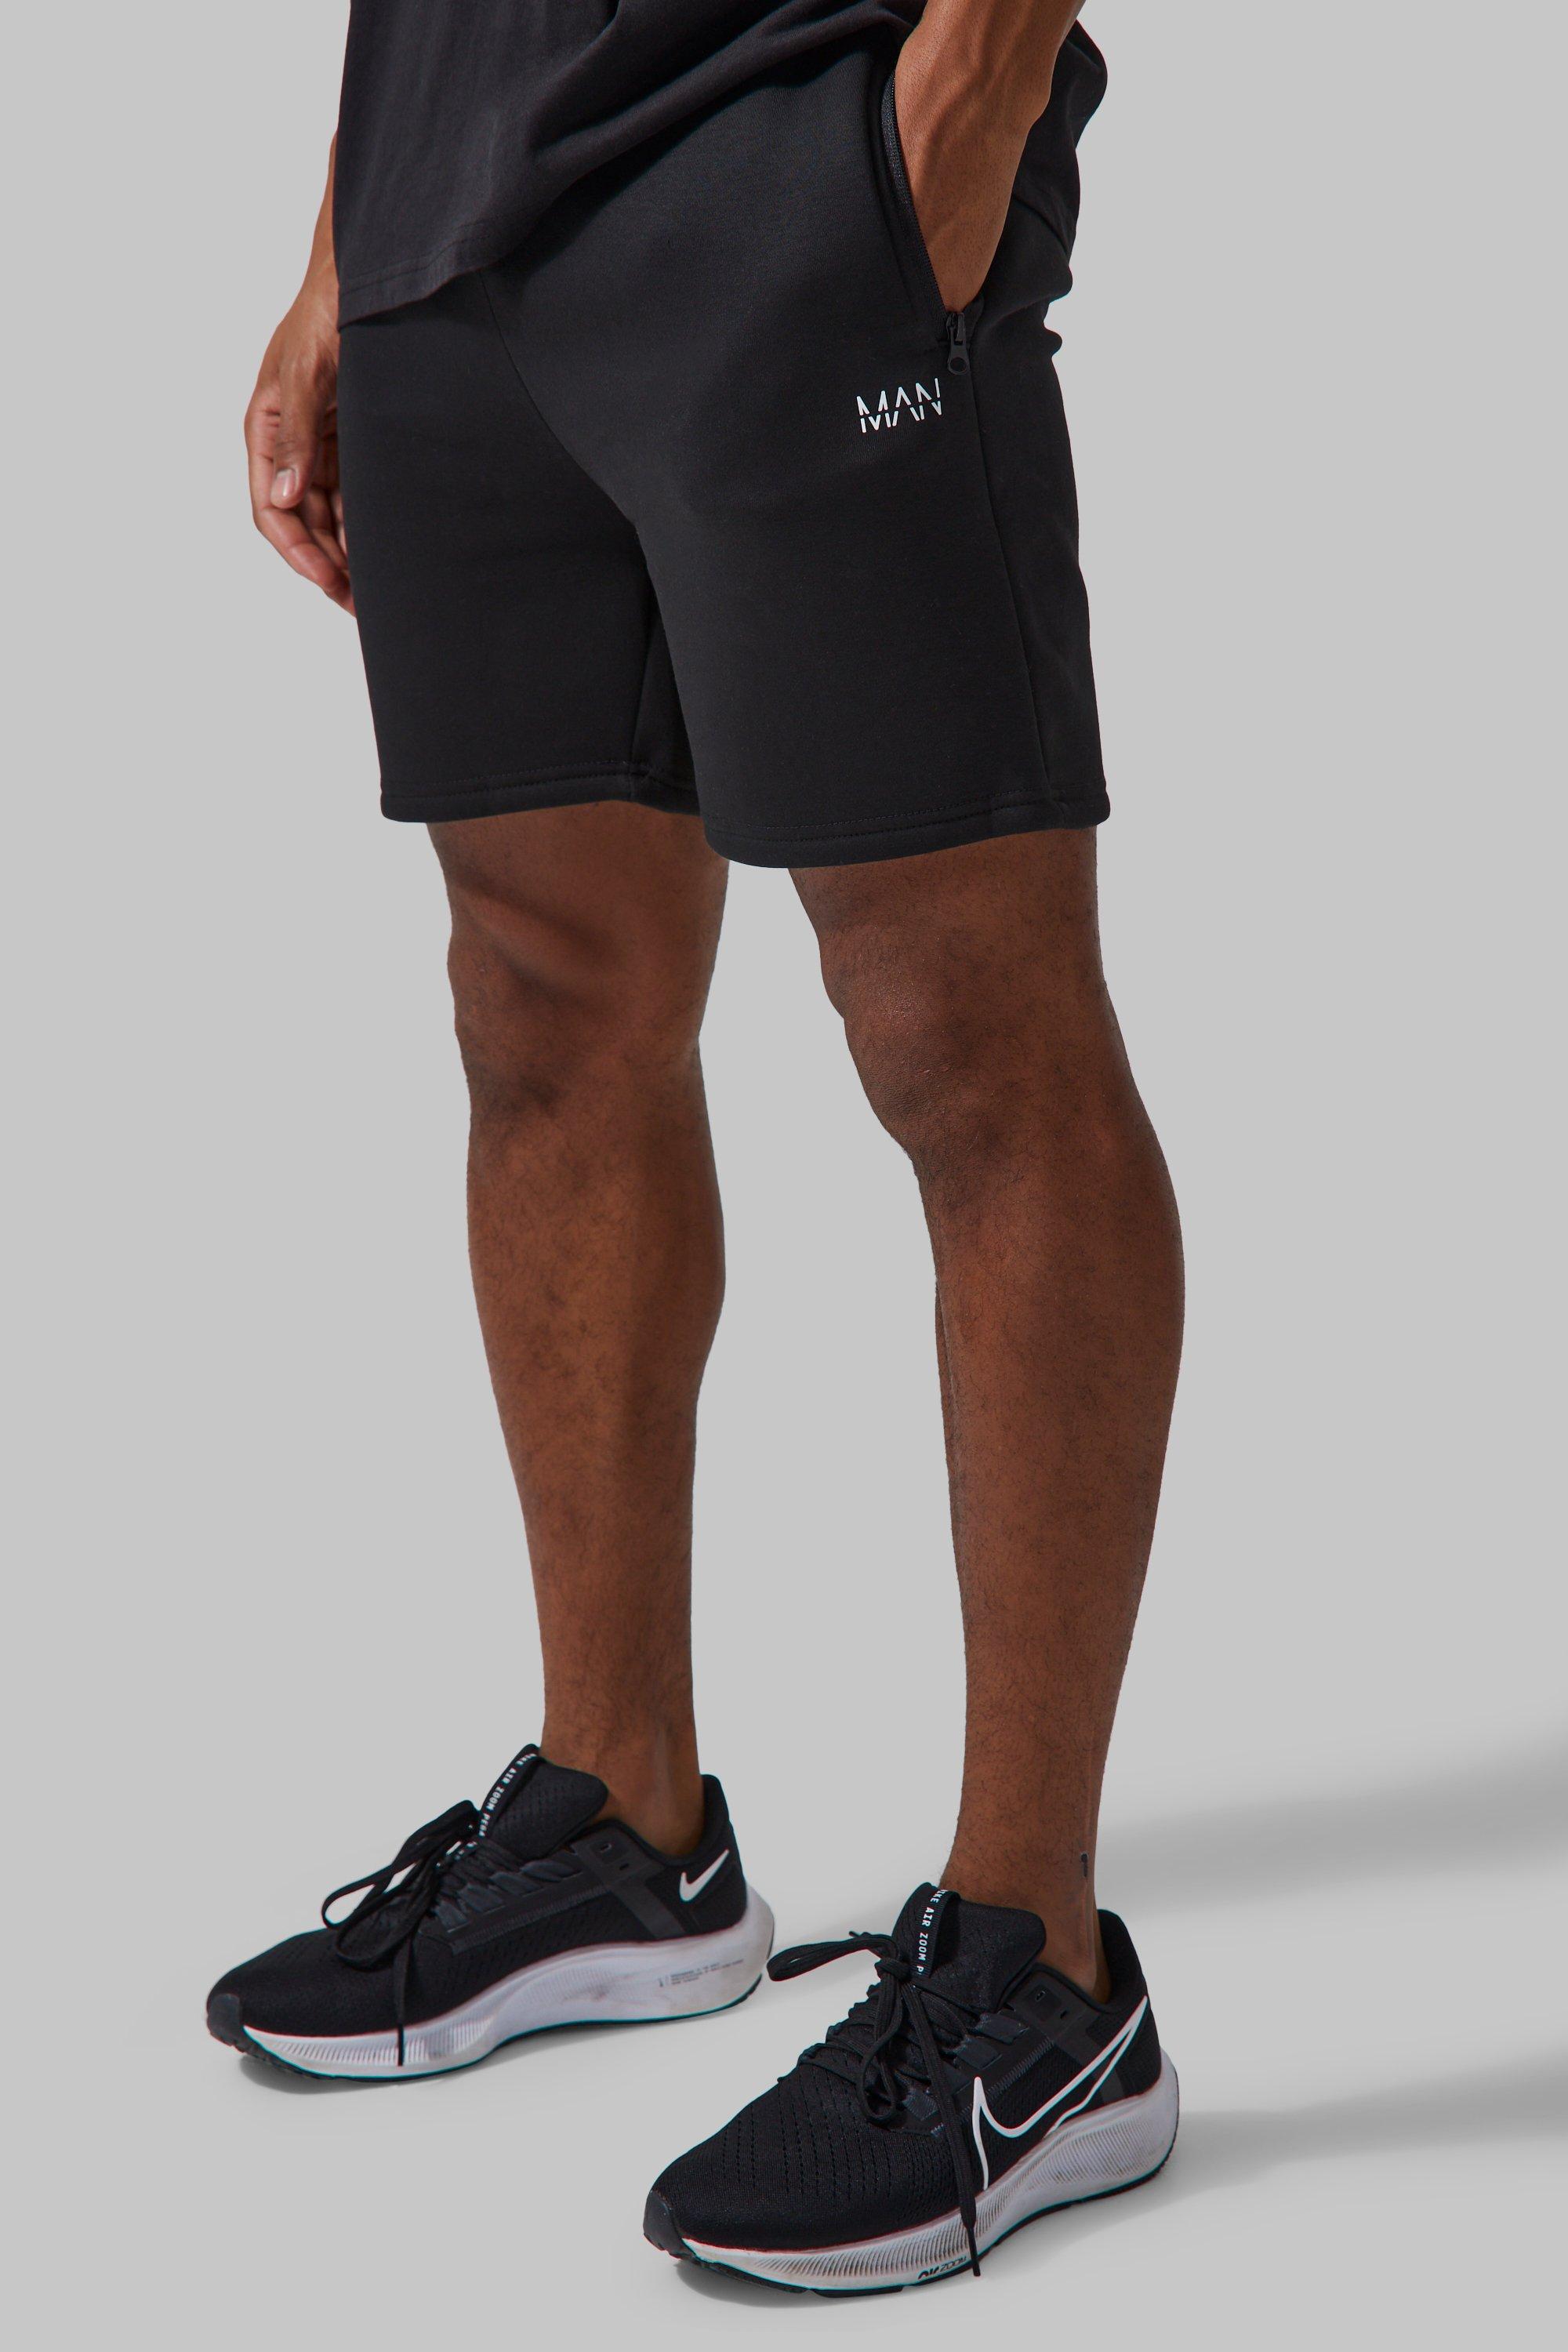 Mens Black Man Active Gym Muscle Fit Shorts, Black